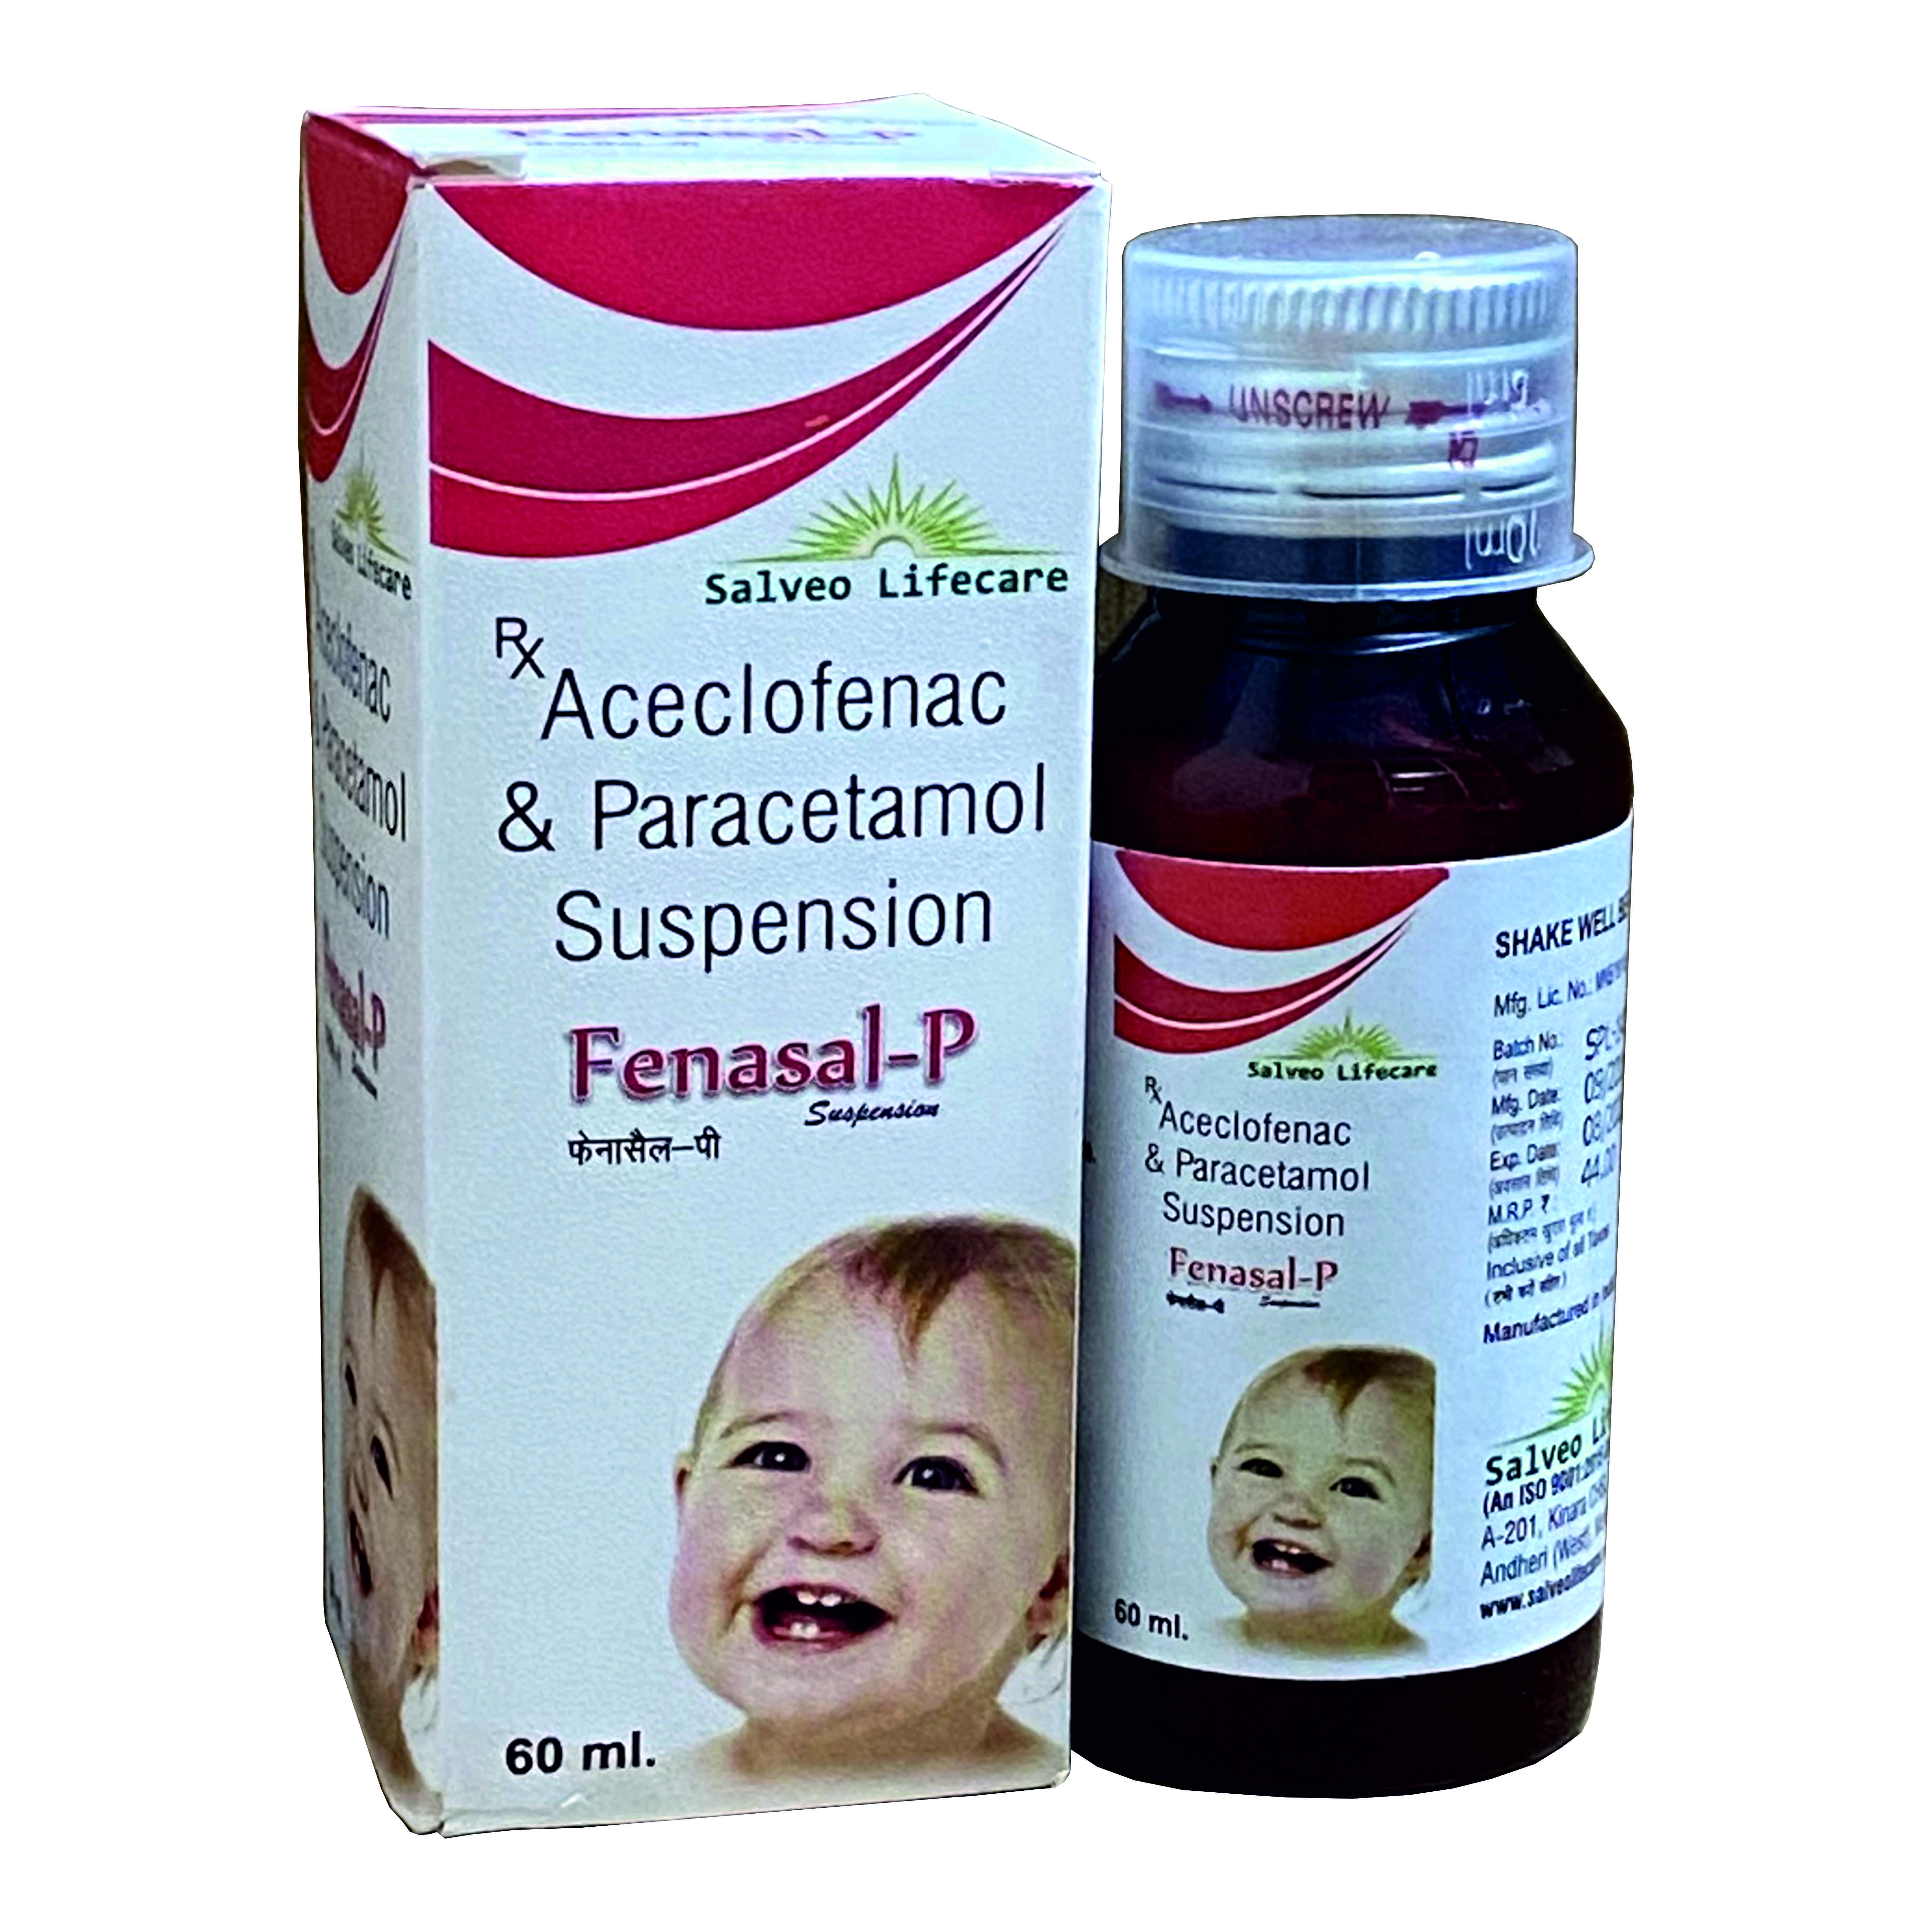 aceclofenac 50 mg, pcm 125 mg